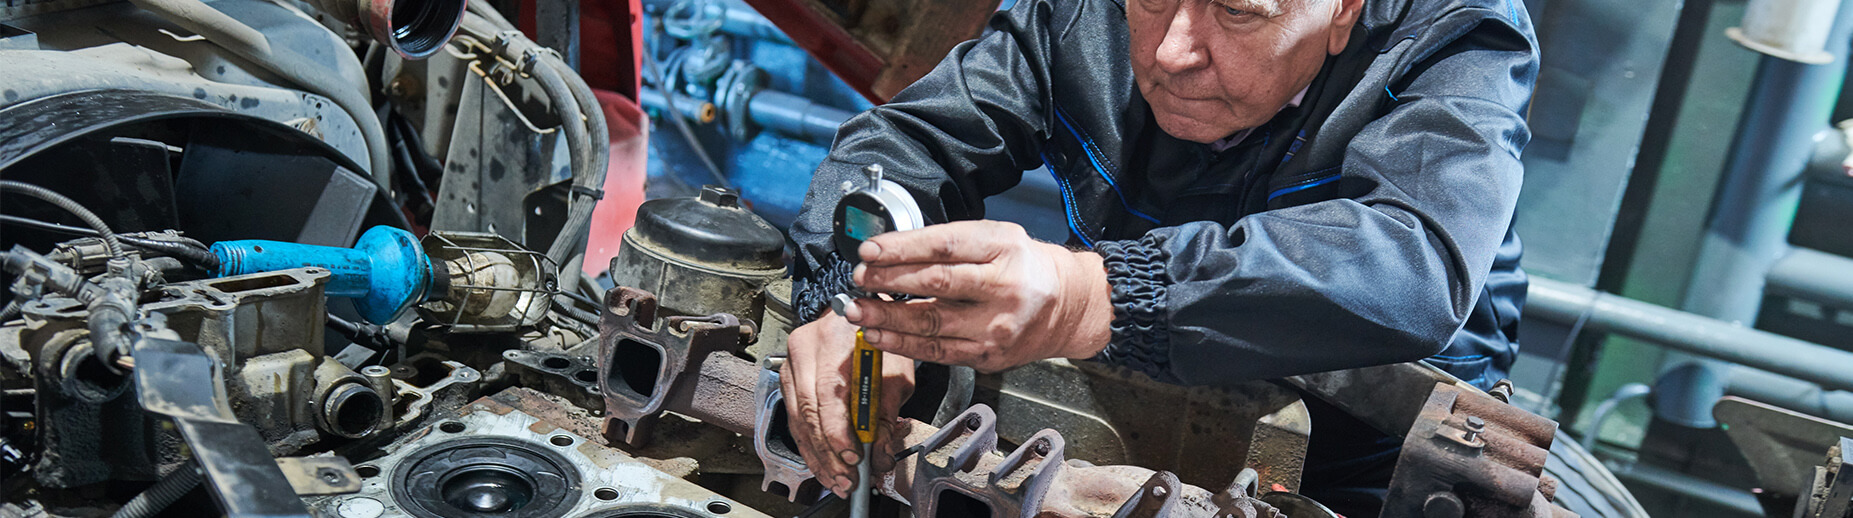 Norfolk Auto Mechanic, Auto Repair and Diesel Mechanic